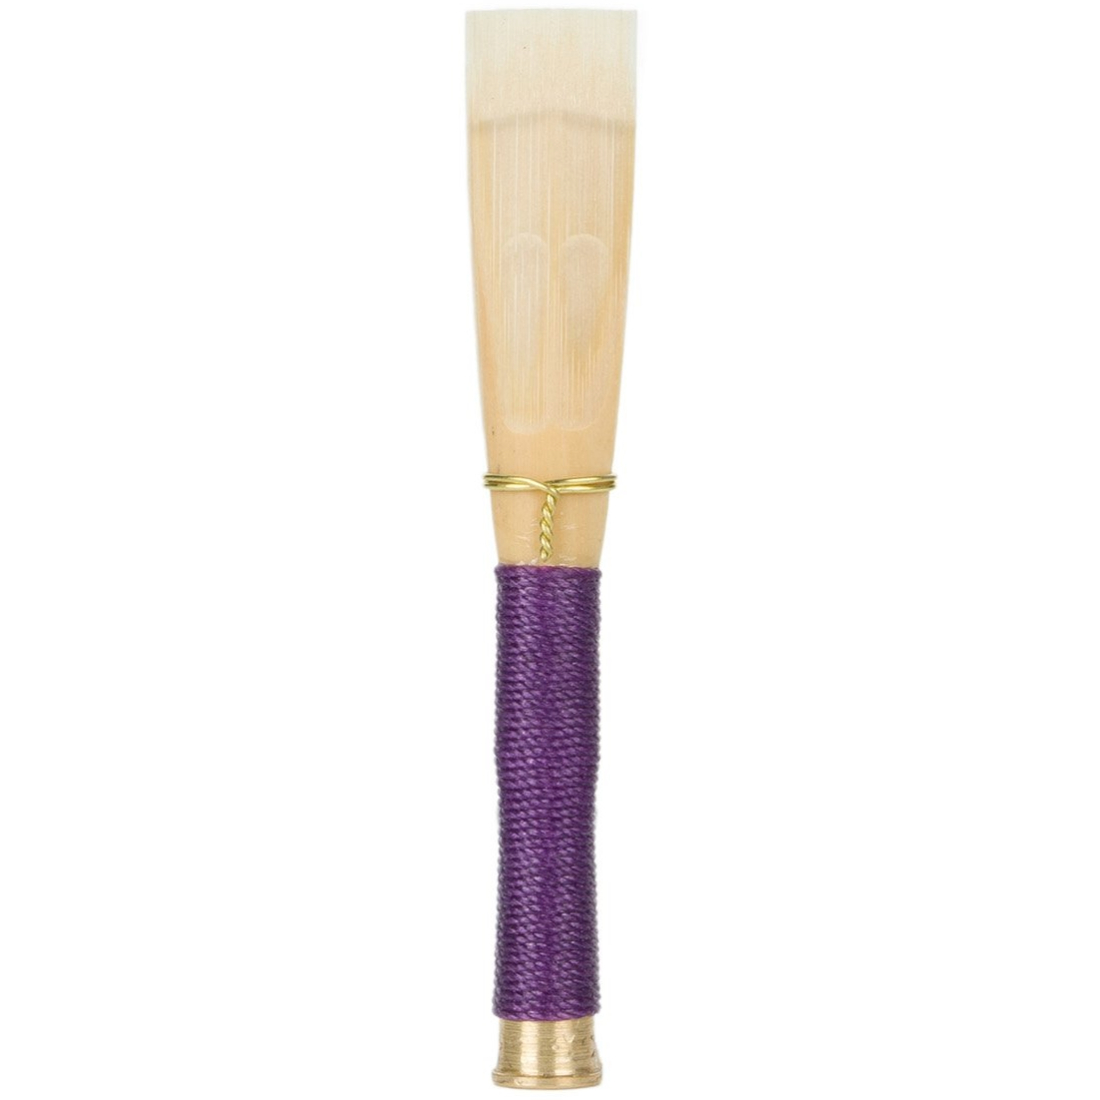 Jones Artist series English Horn Reed cane wound with purple string - strength of Medium Hard